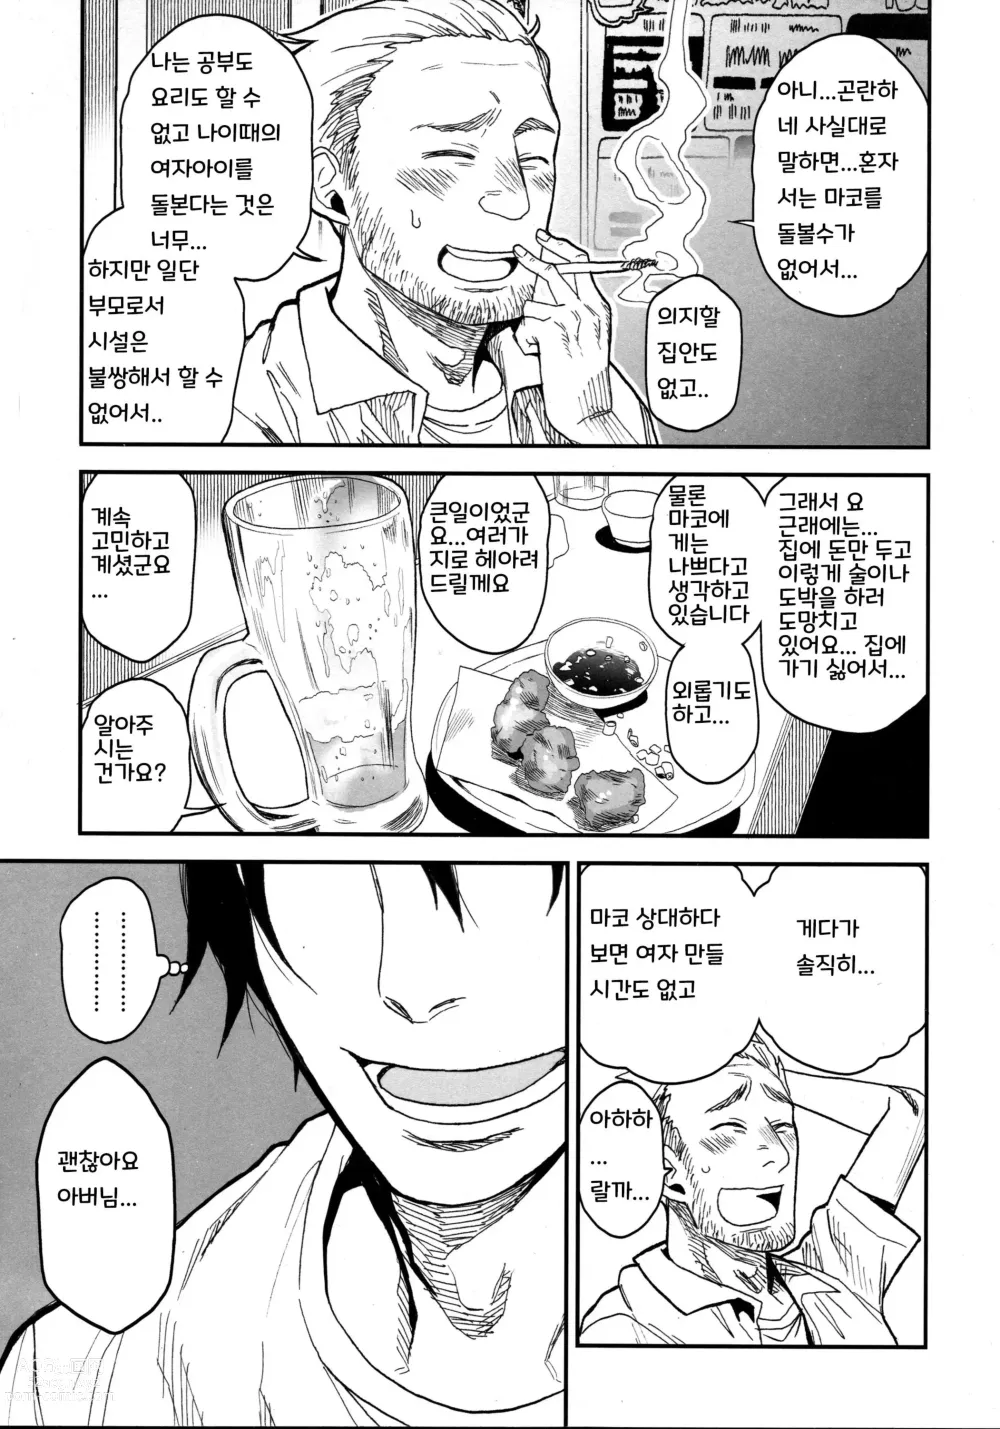 Page 17 of doujinshi Tonari no Mako-chan Vol. 3